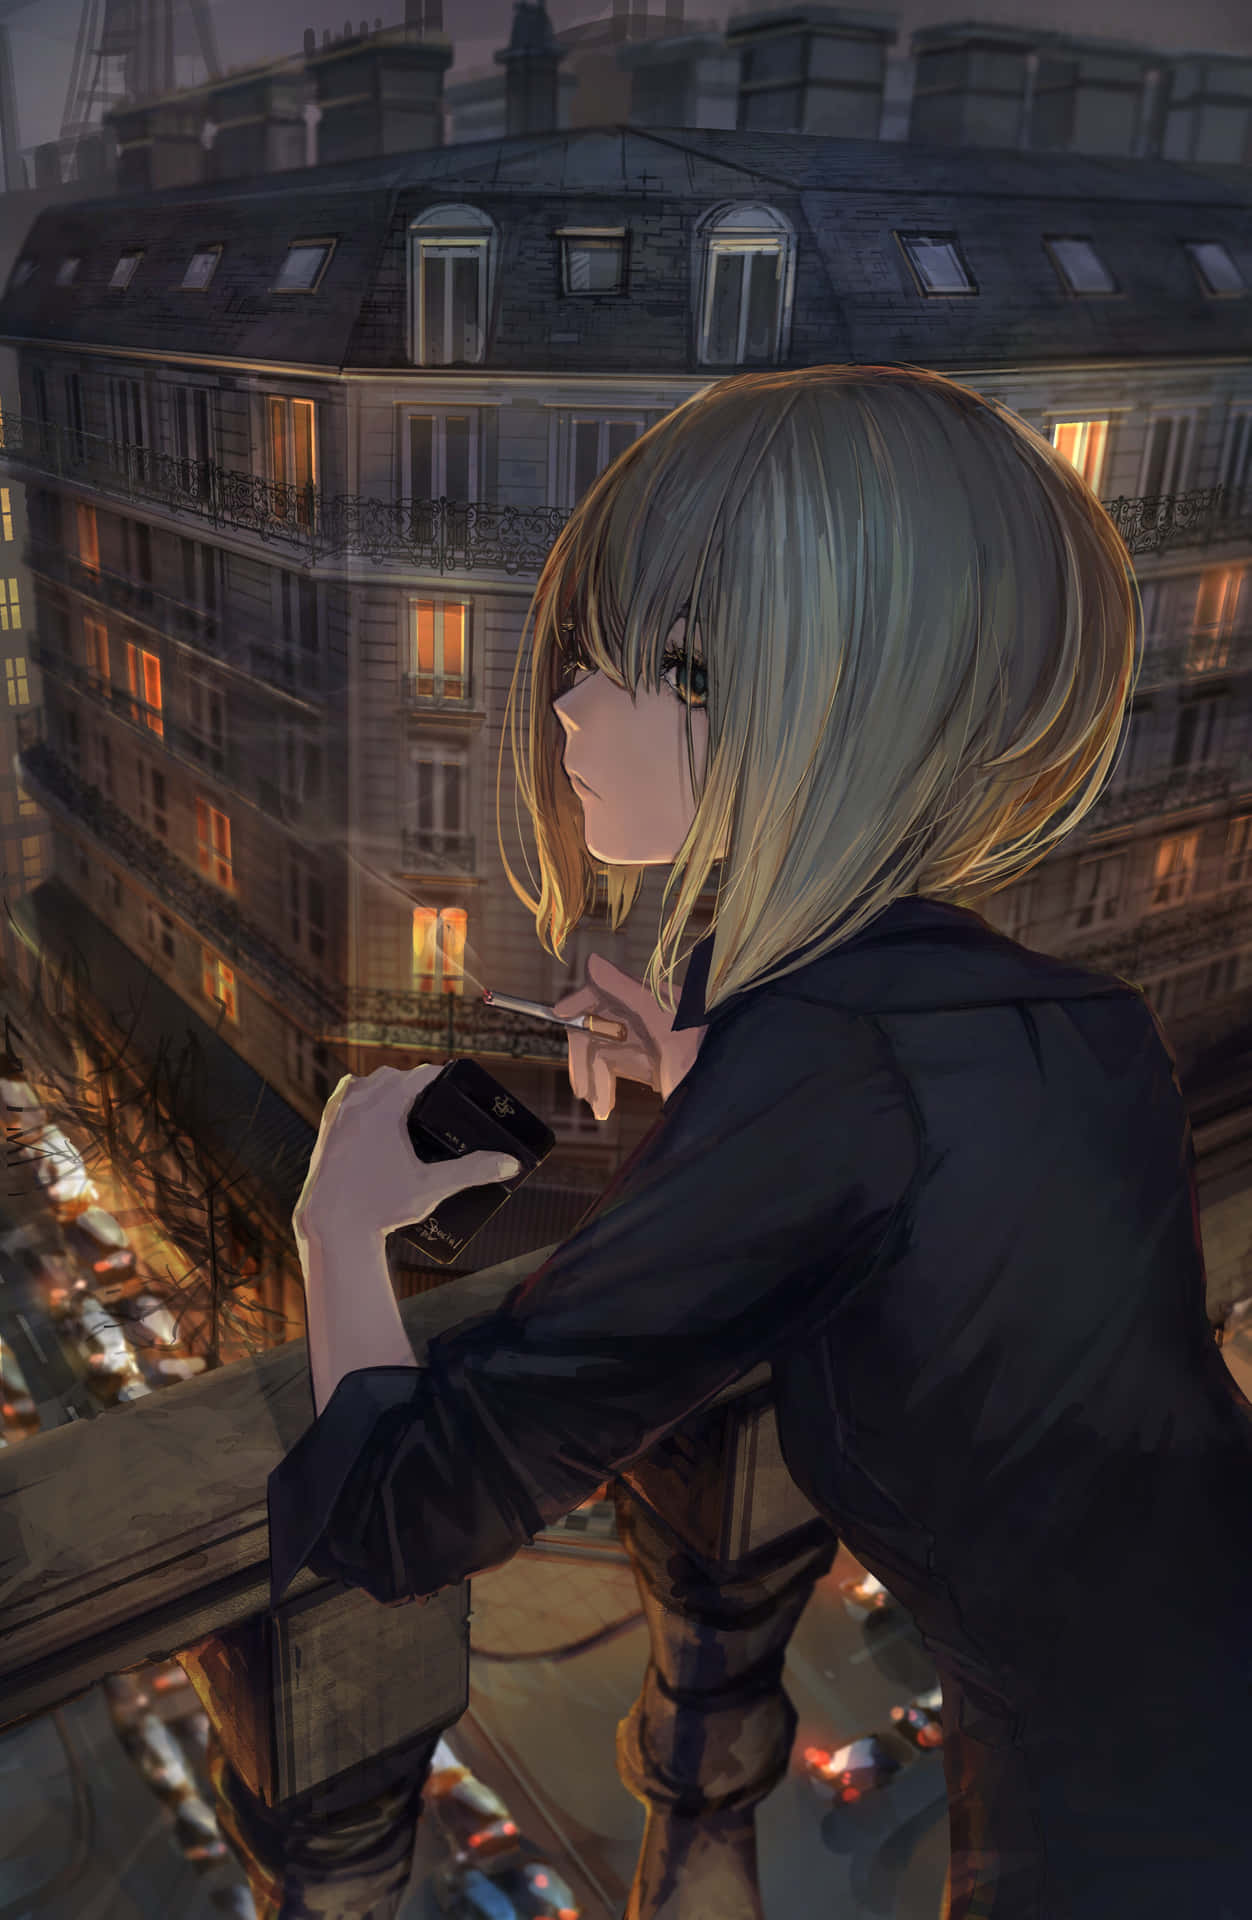 City Anime Girl Profile Picture